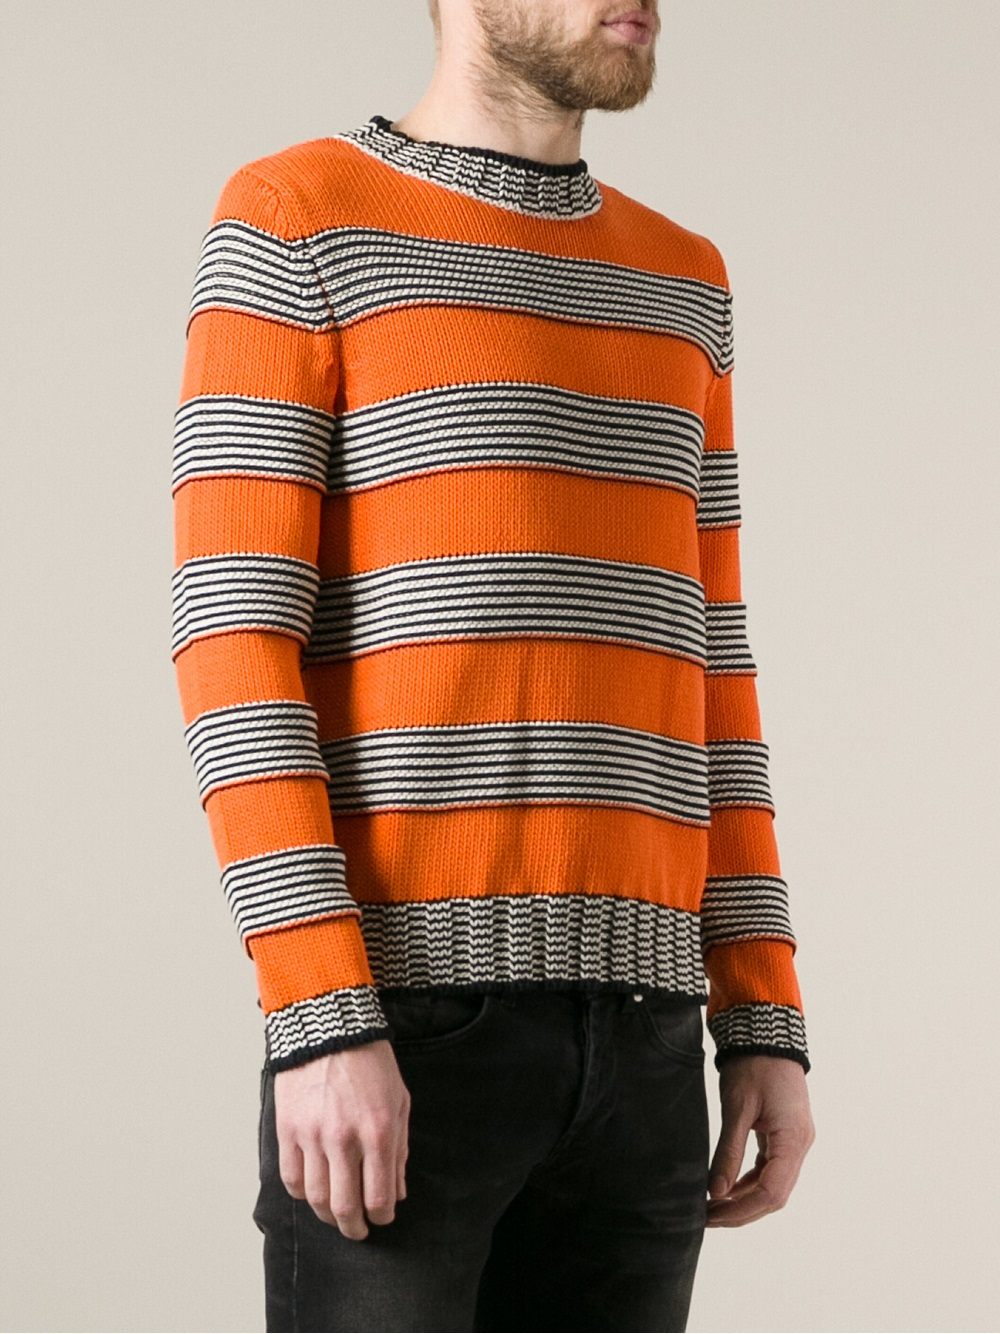 Lyst - Dondup Striped Sweater in Orange for Men